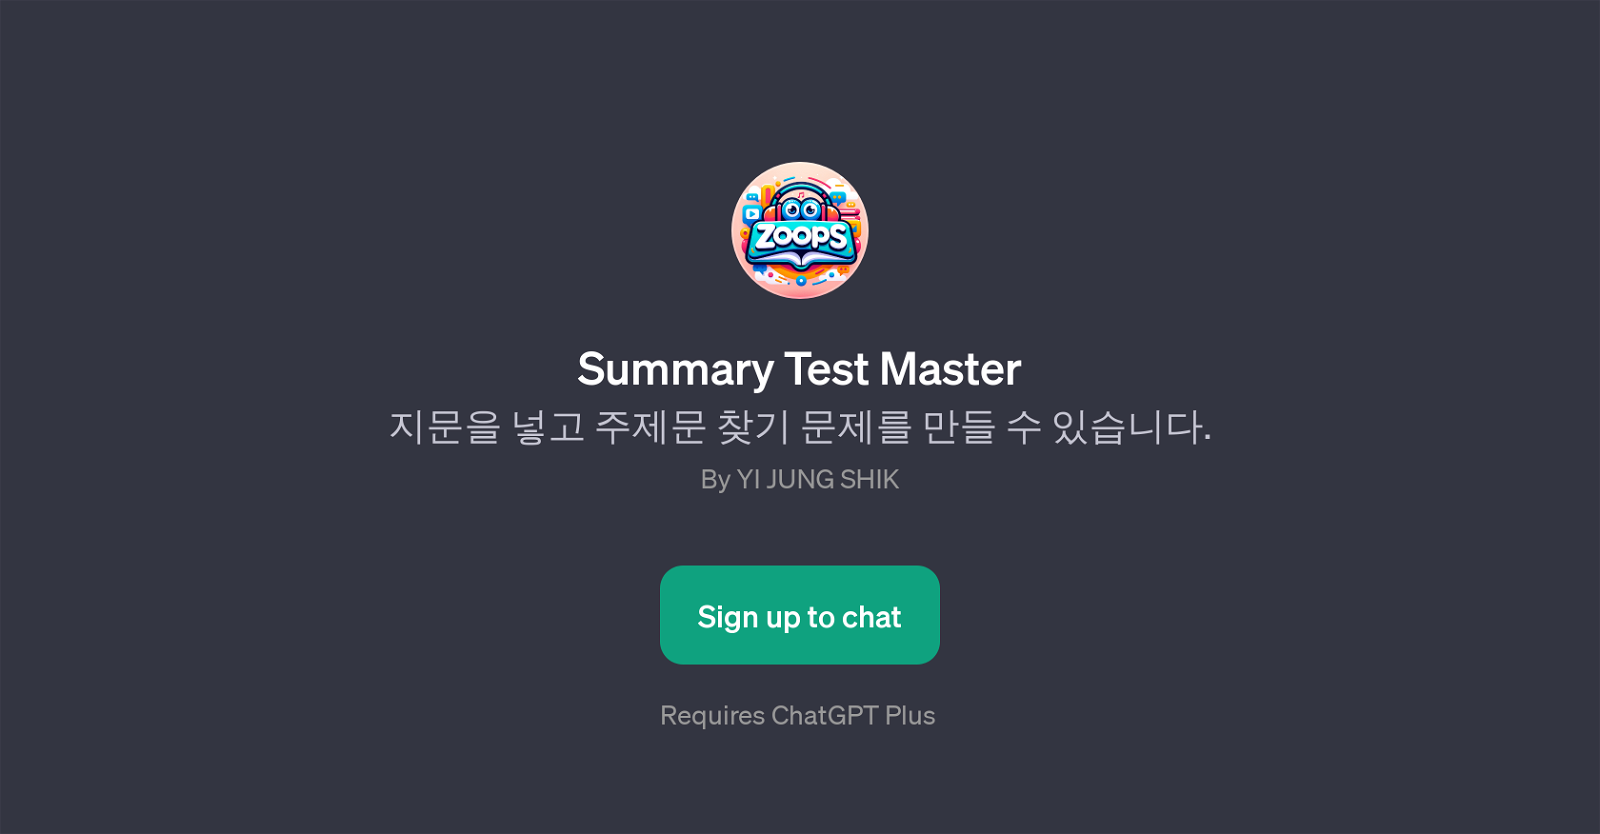 Summary Test Master website